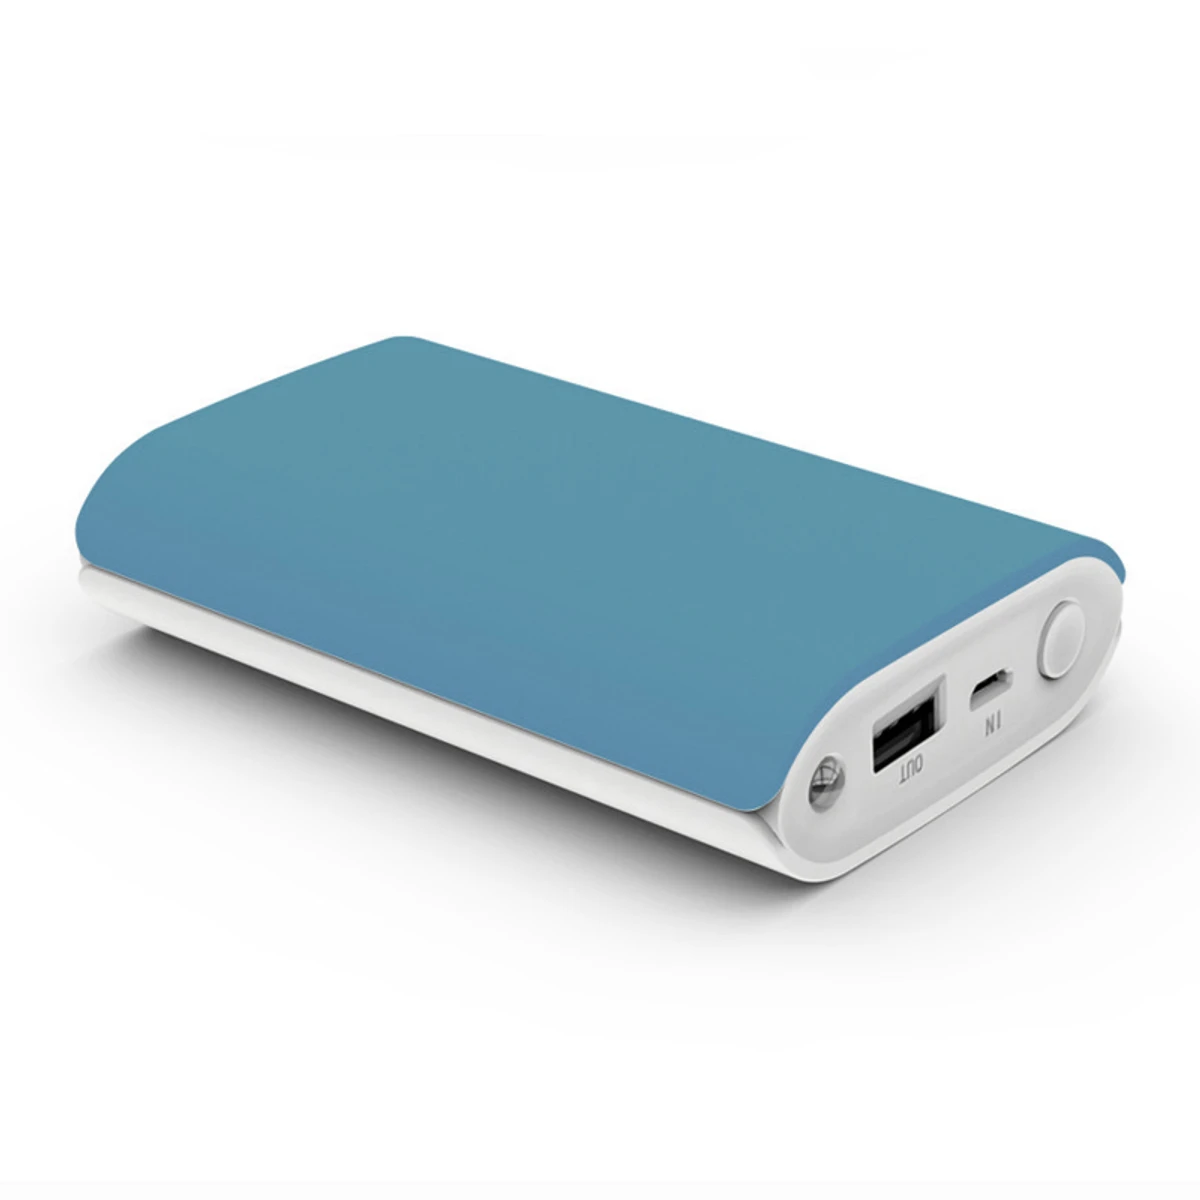 PZX  Smart Power Bank 10400mAh USB Power Bank Portable Charger